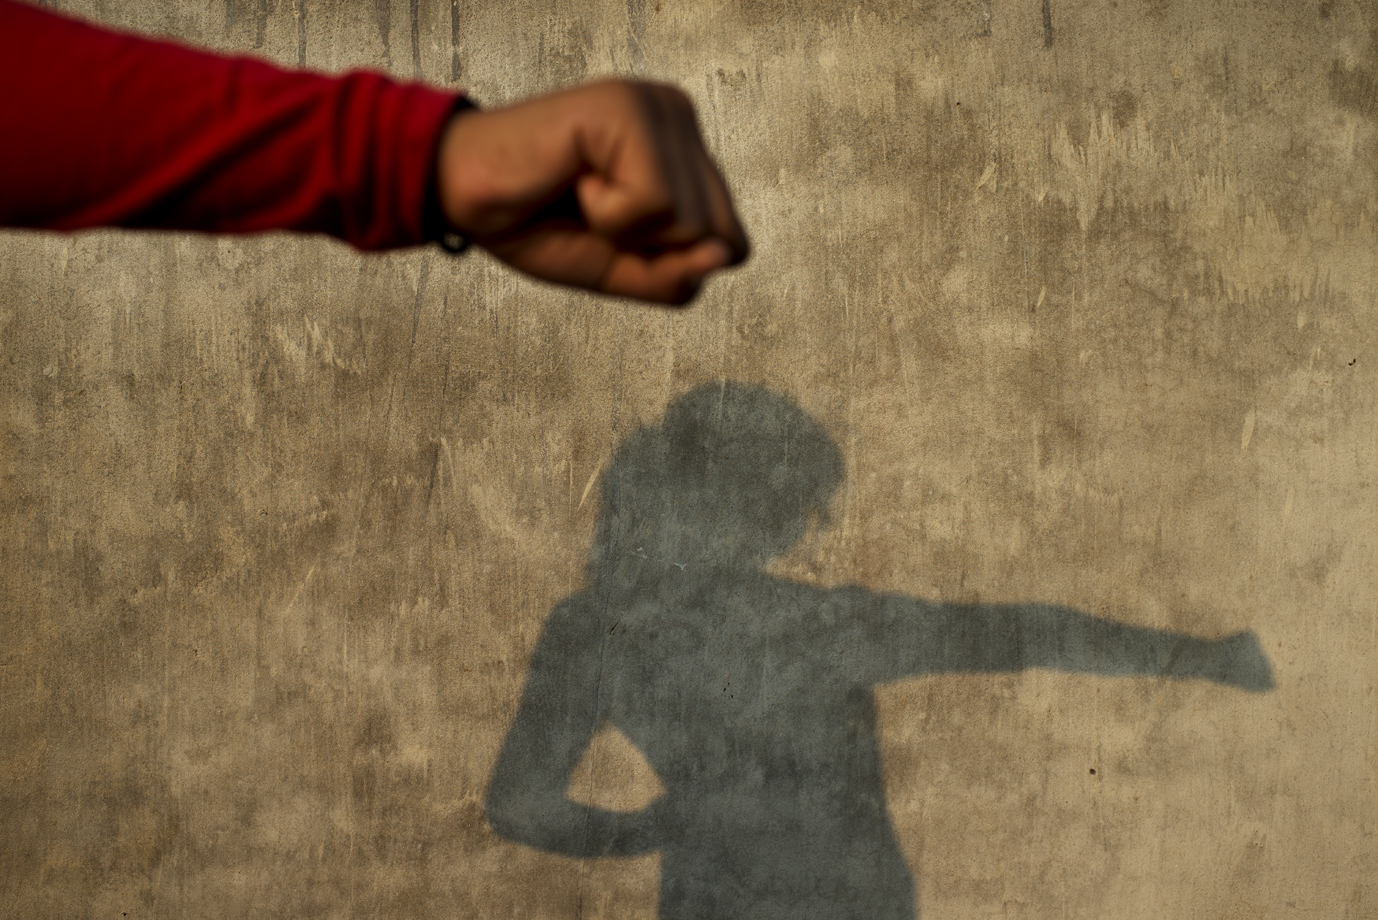  Teenage girl train martial arts to defend her selves against rapists, Uttar Pradesh / India -2014     